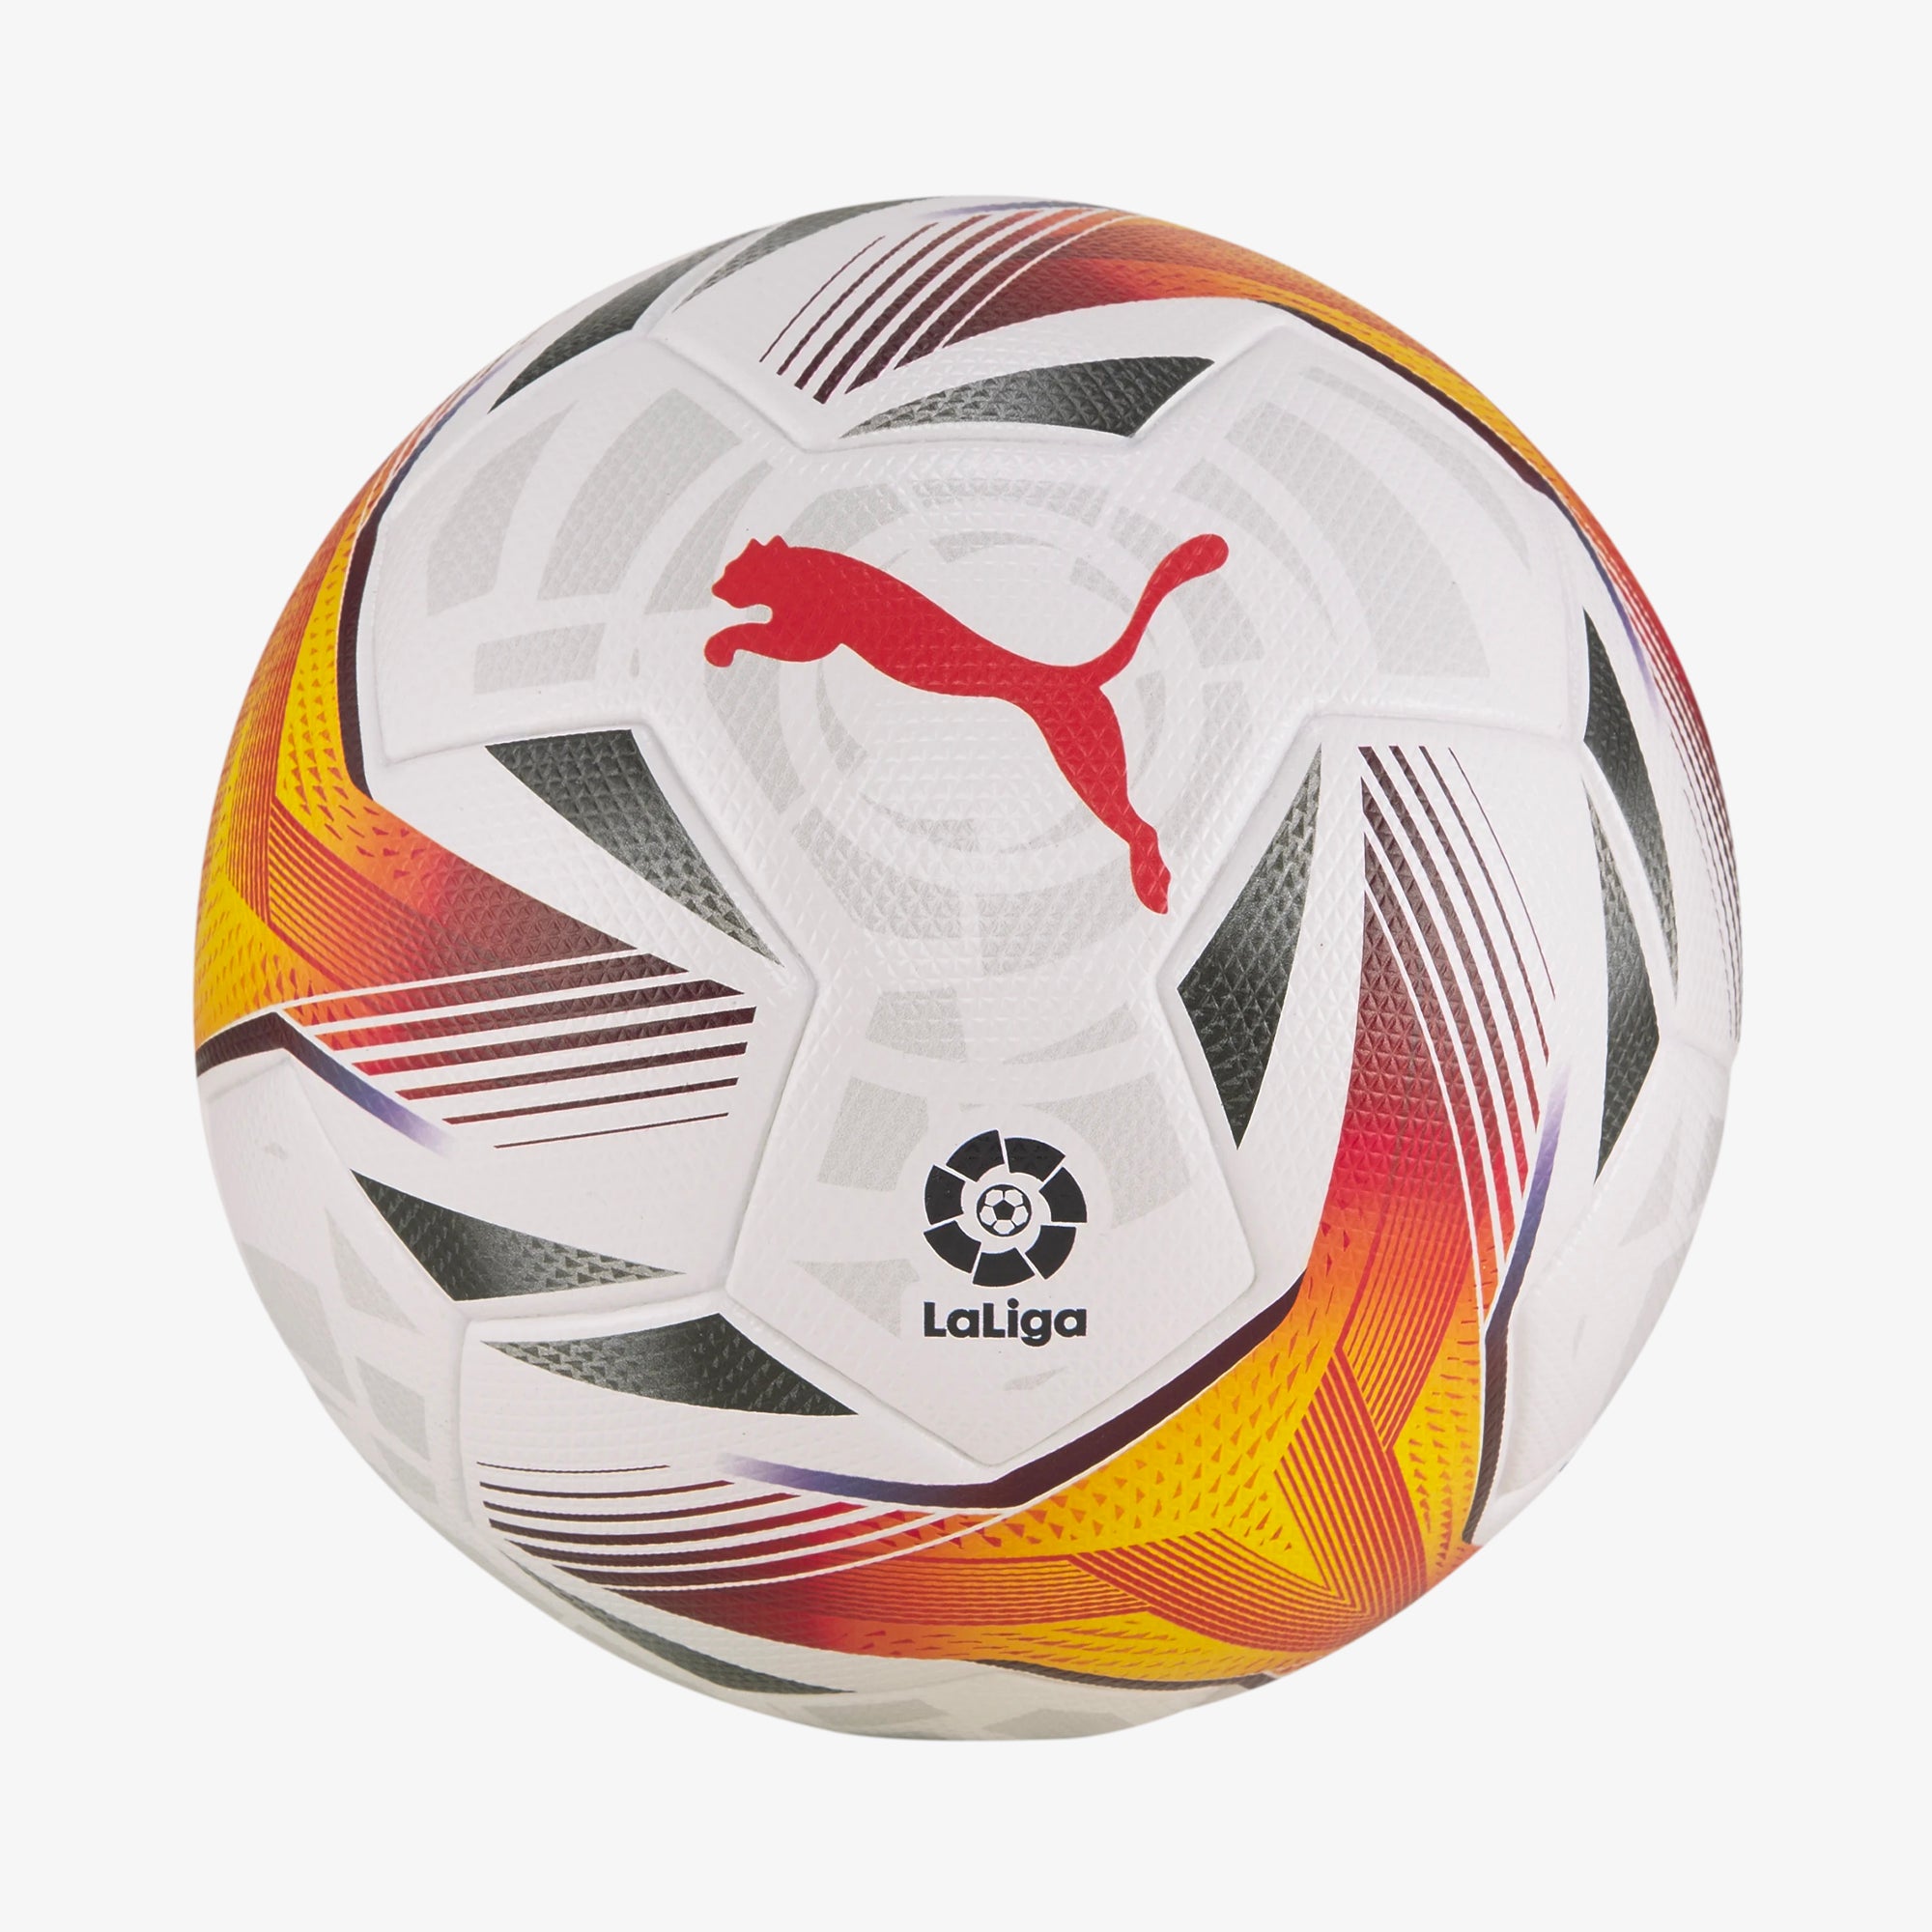 La Liga 1 Accelerate FIFA Quality Pro Soccer Ball